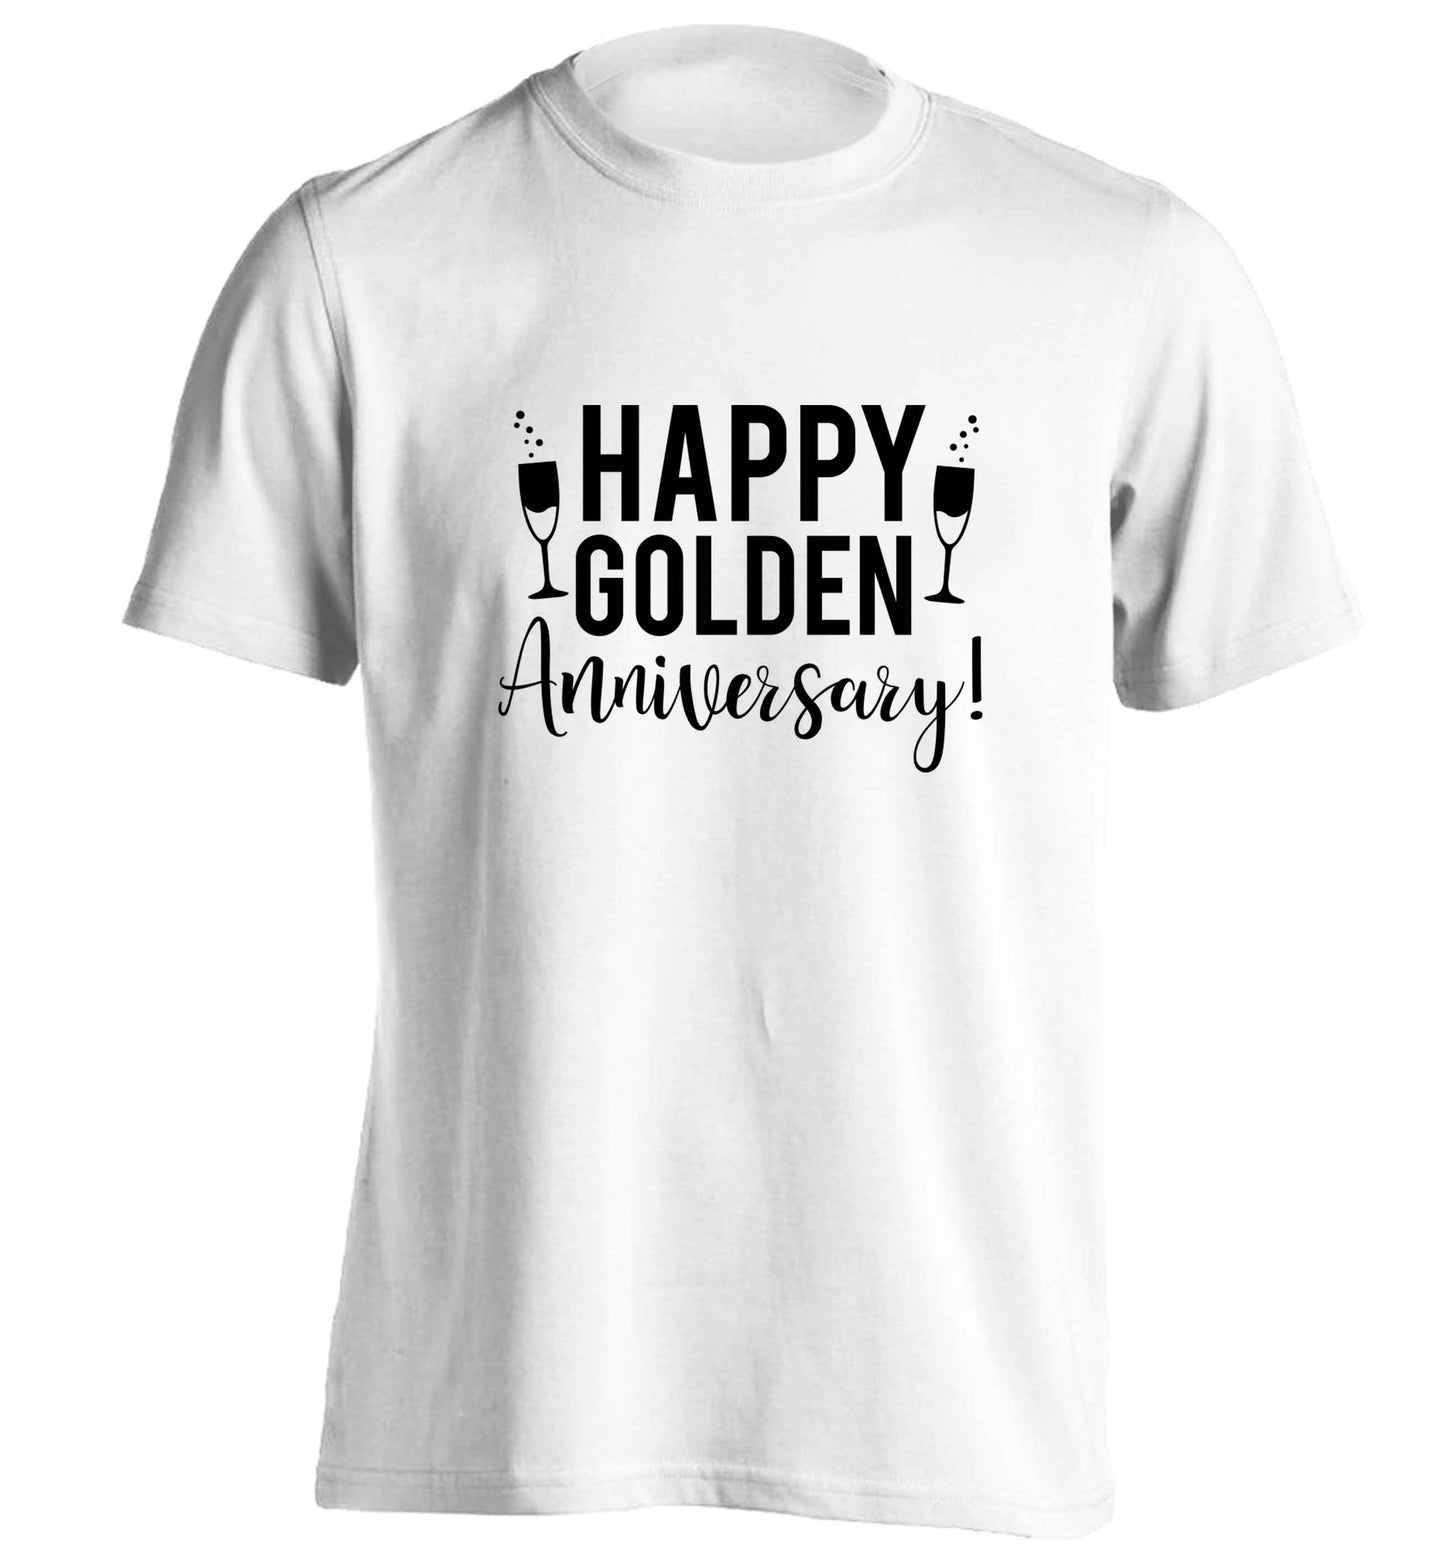 Happy golden anniversary! adults unisex white Tshirt 2XL